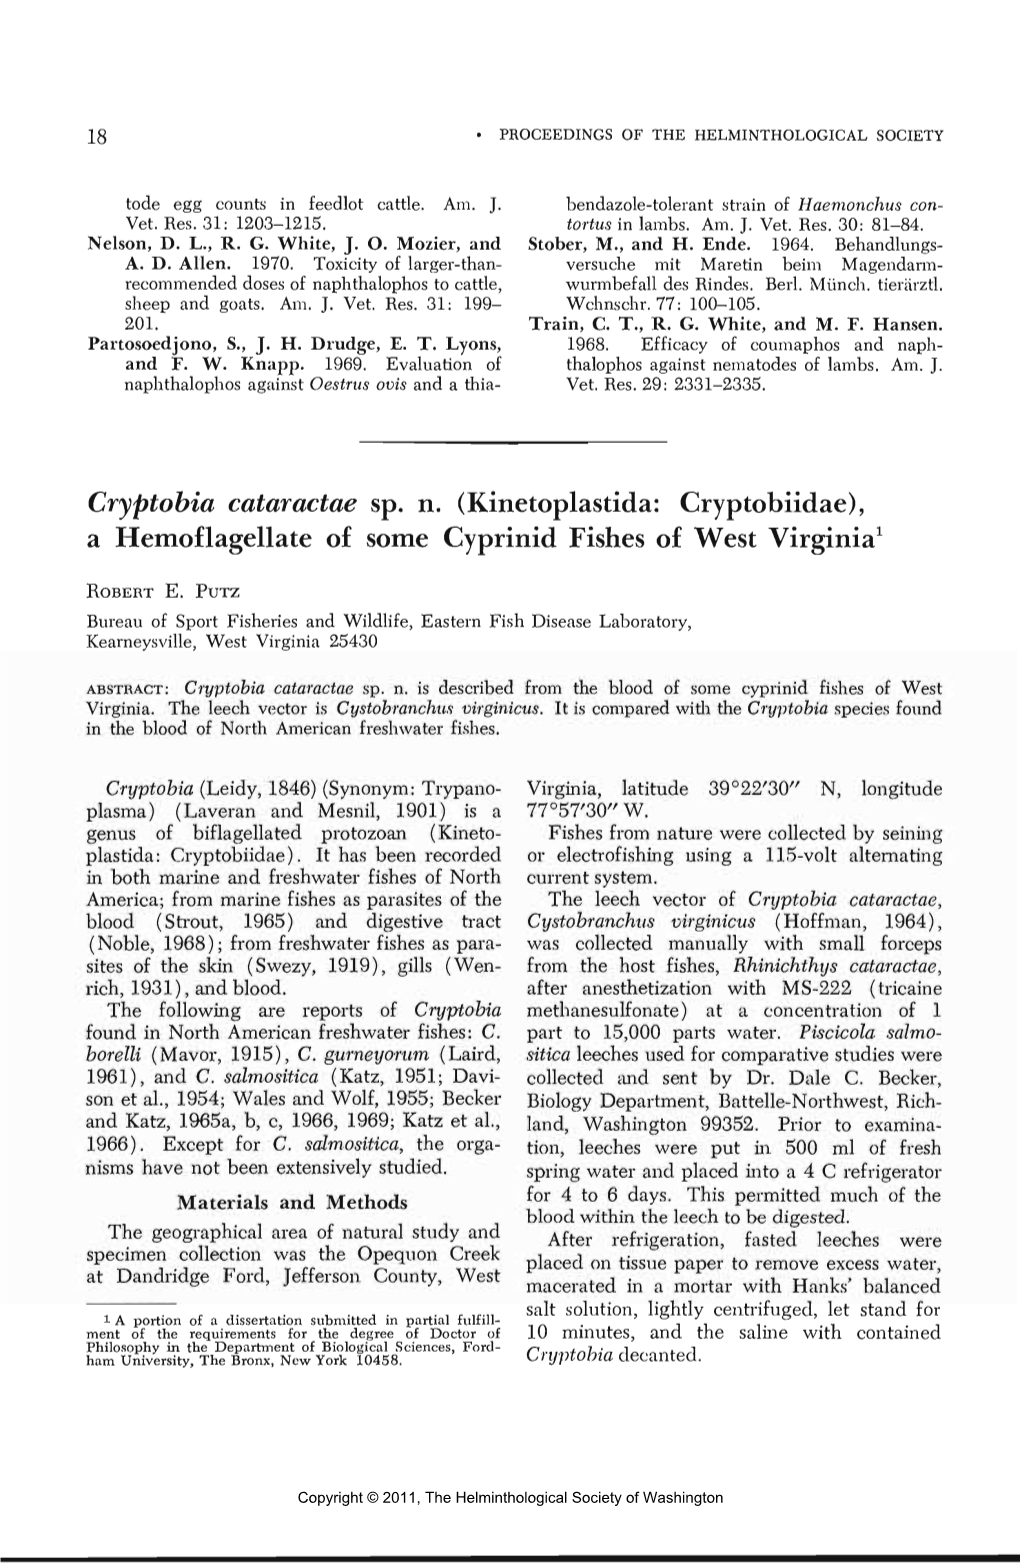 Cryptobia Cataractae Sp. N. (Kinetoplastida: Cryptobiidae), a Hemoflagellate of Some Cyprinid Fishes of West Virginia1